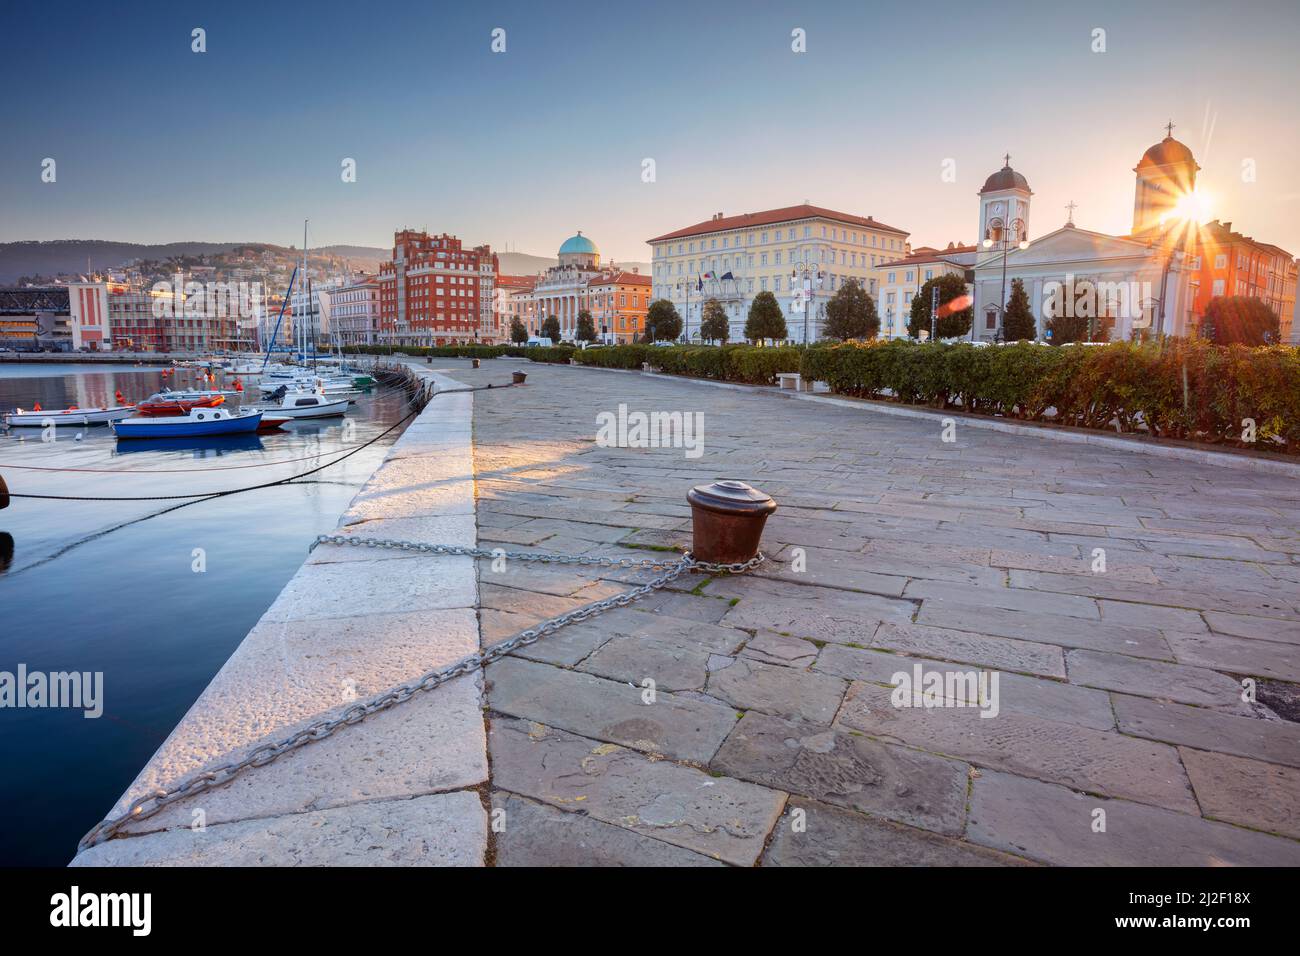 Trieste, Italia. Imagen del paisaje urbano del centro de Trieste, Italia al amanecer. Foto de stock